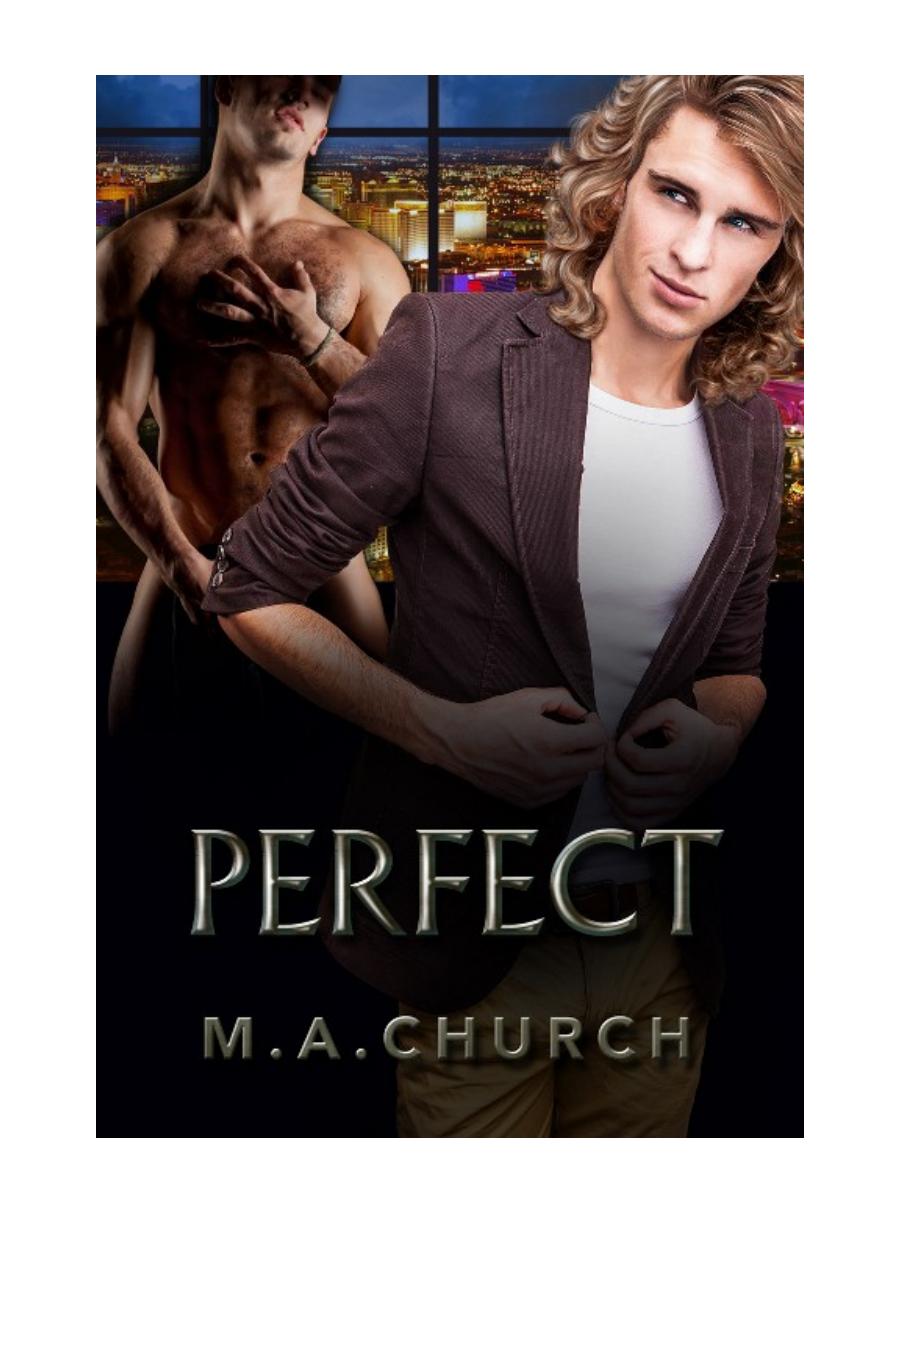 Perfect by M.A. Church